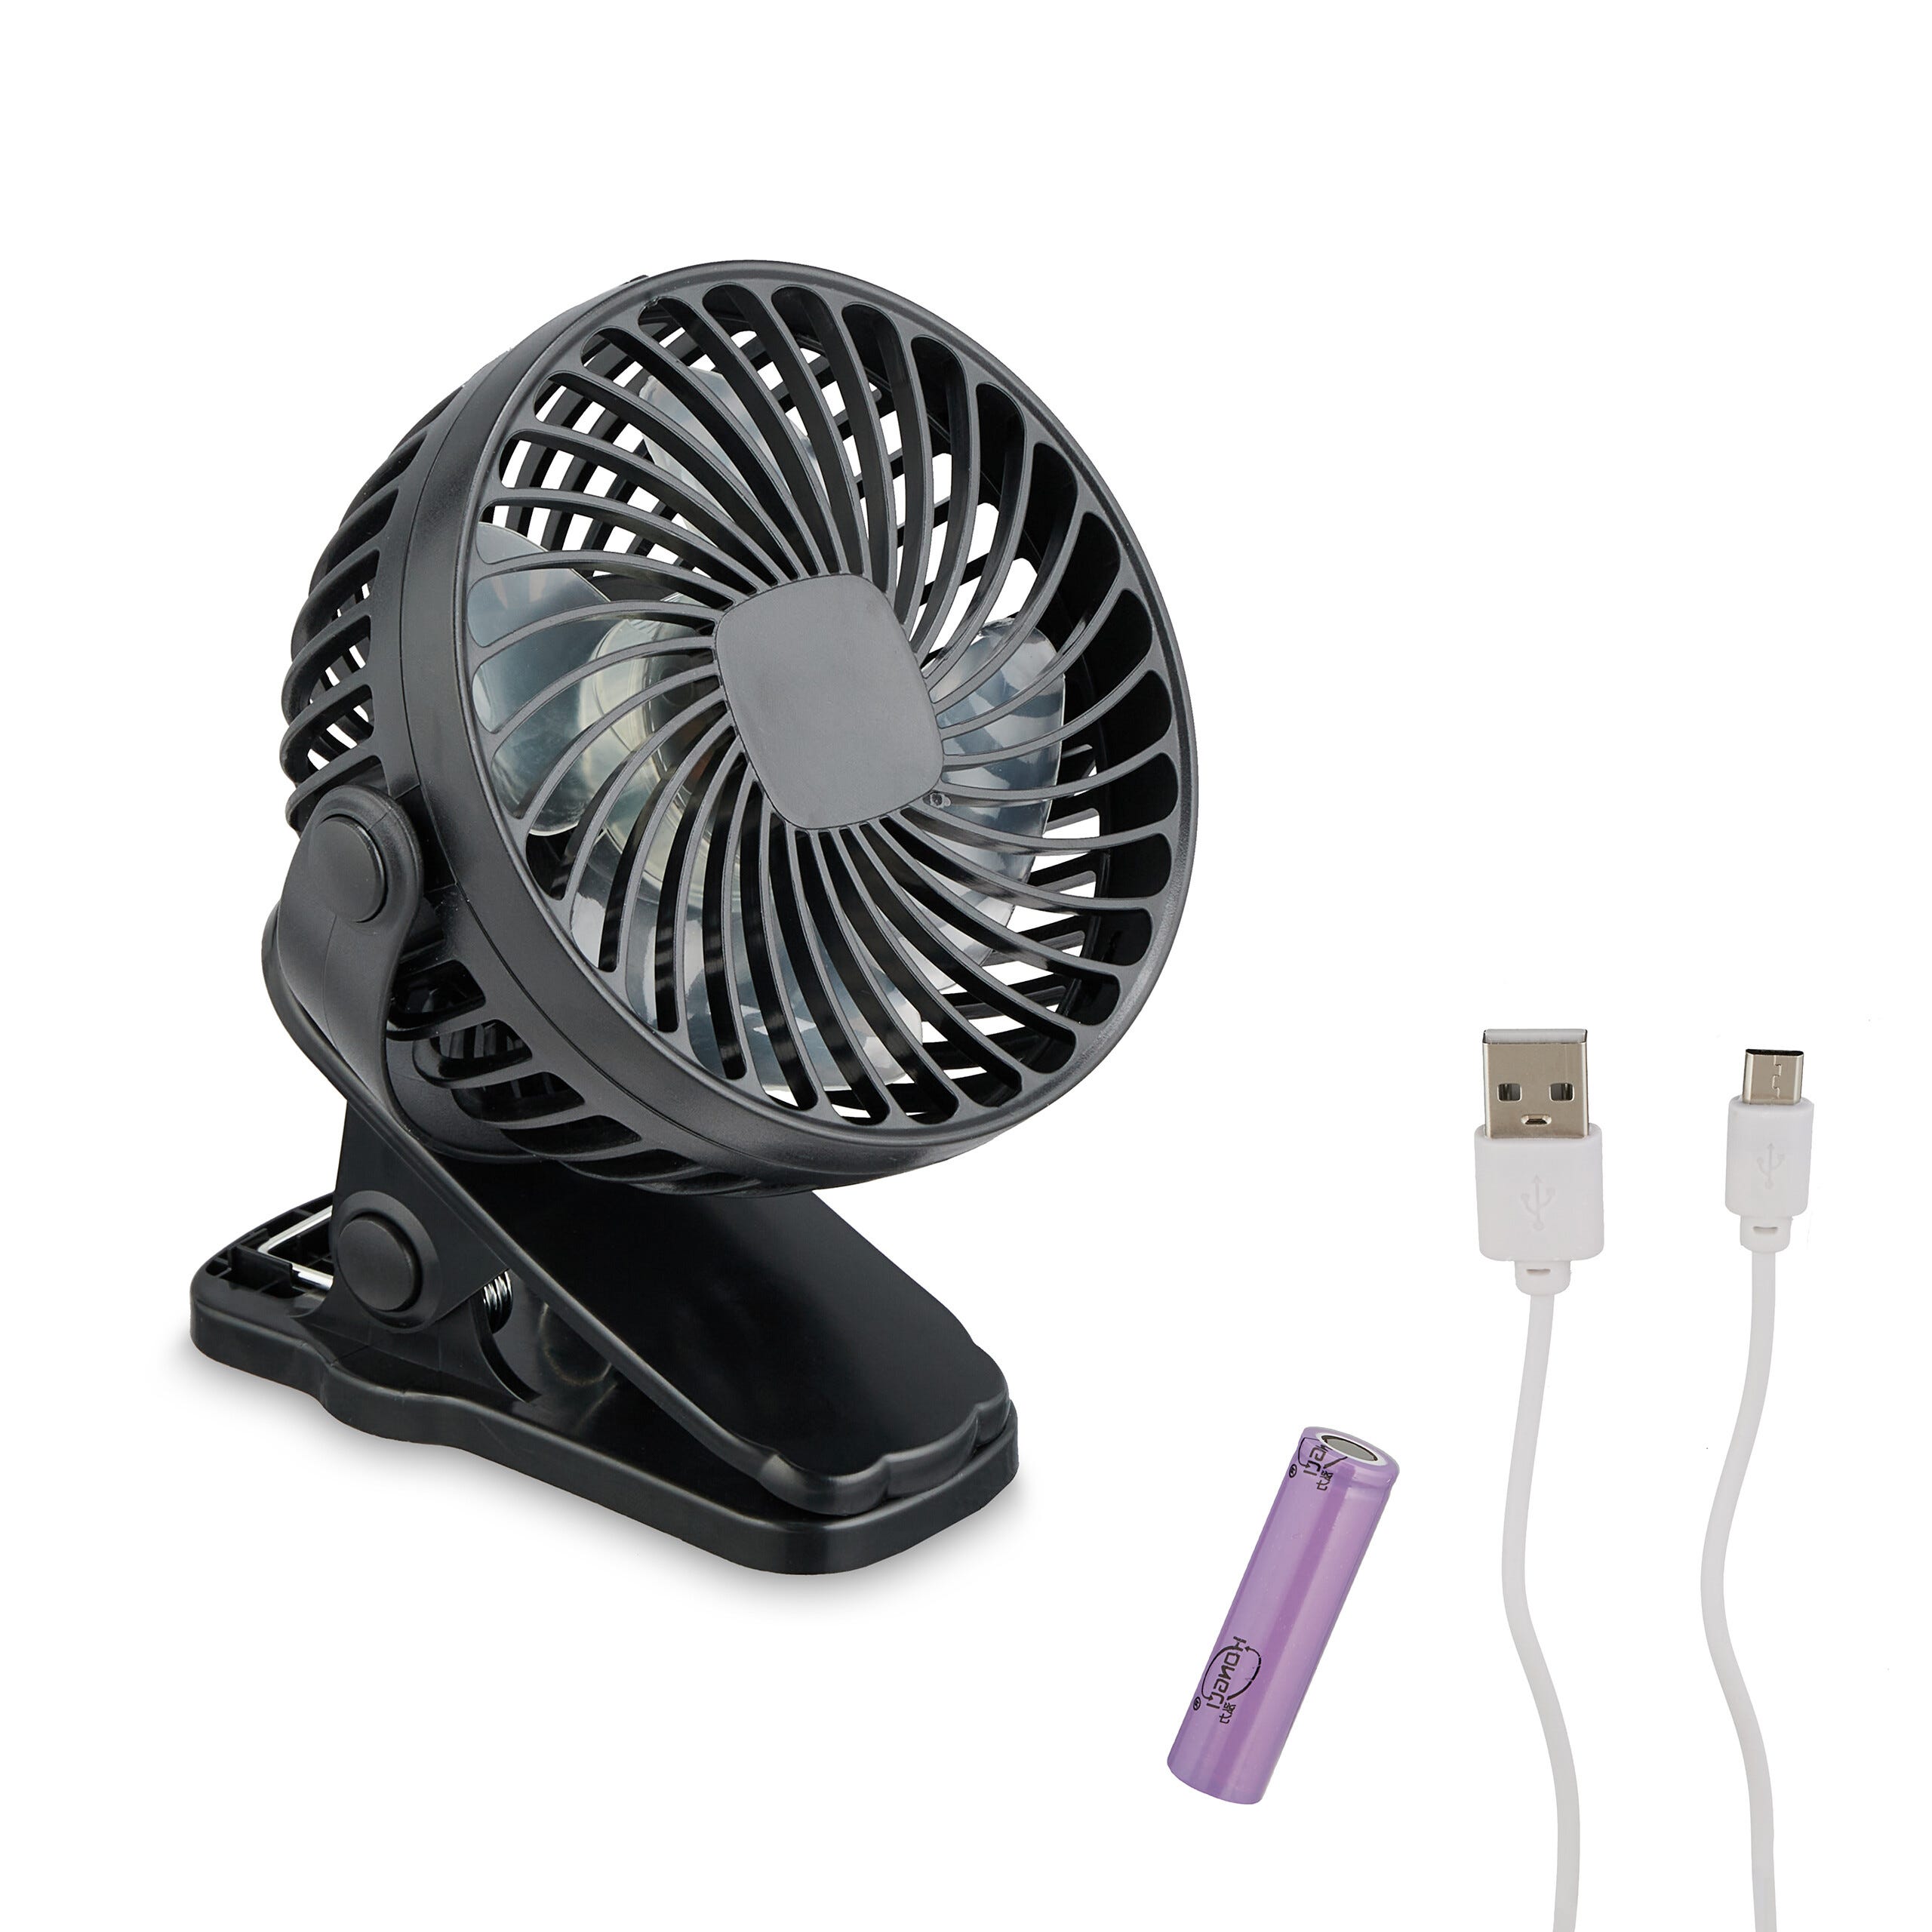 Ventilateur USB silencieux, mini ventilateur de bureau 3 vitesses